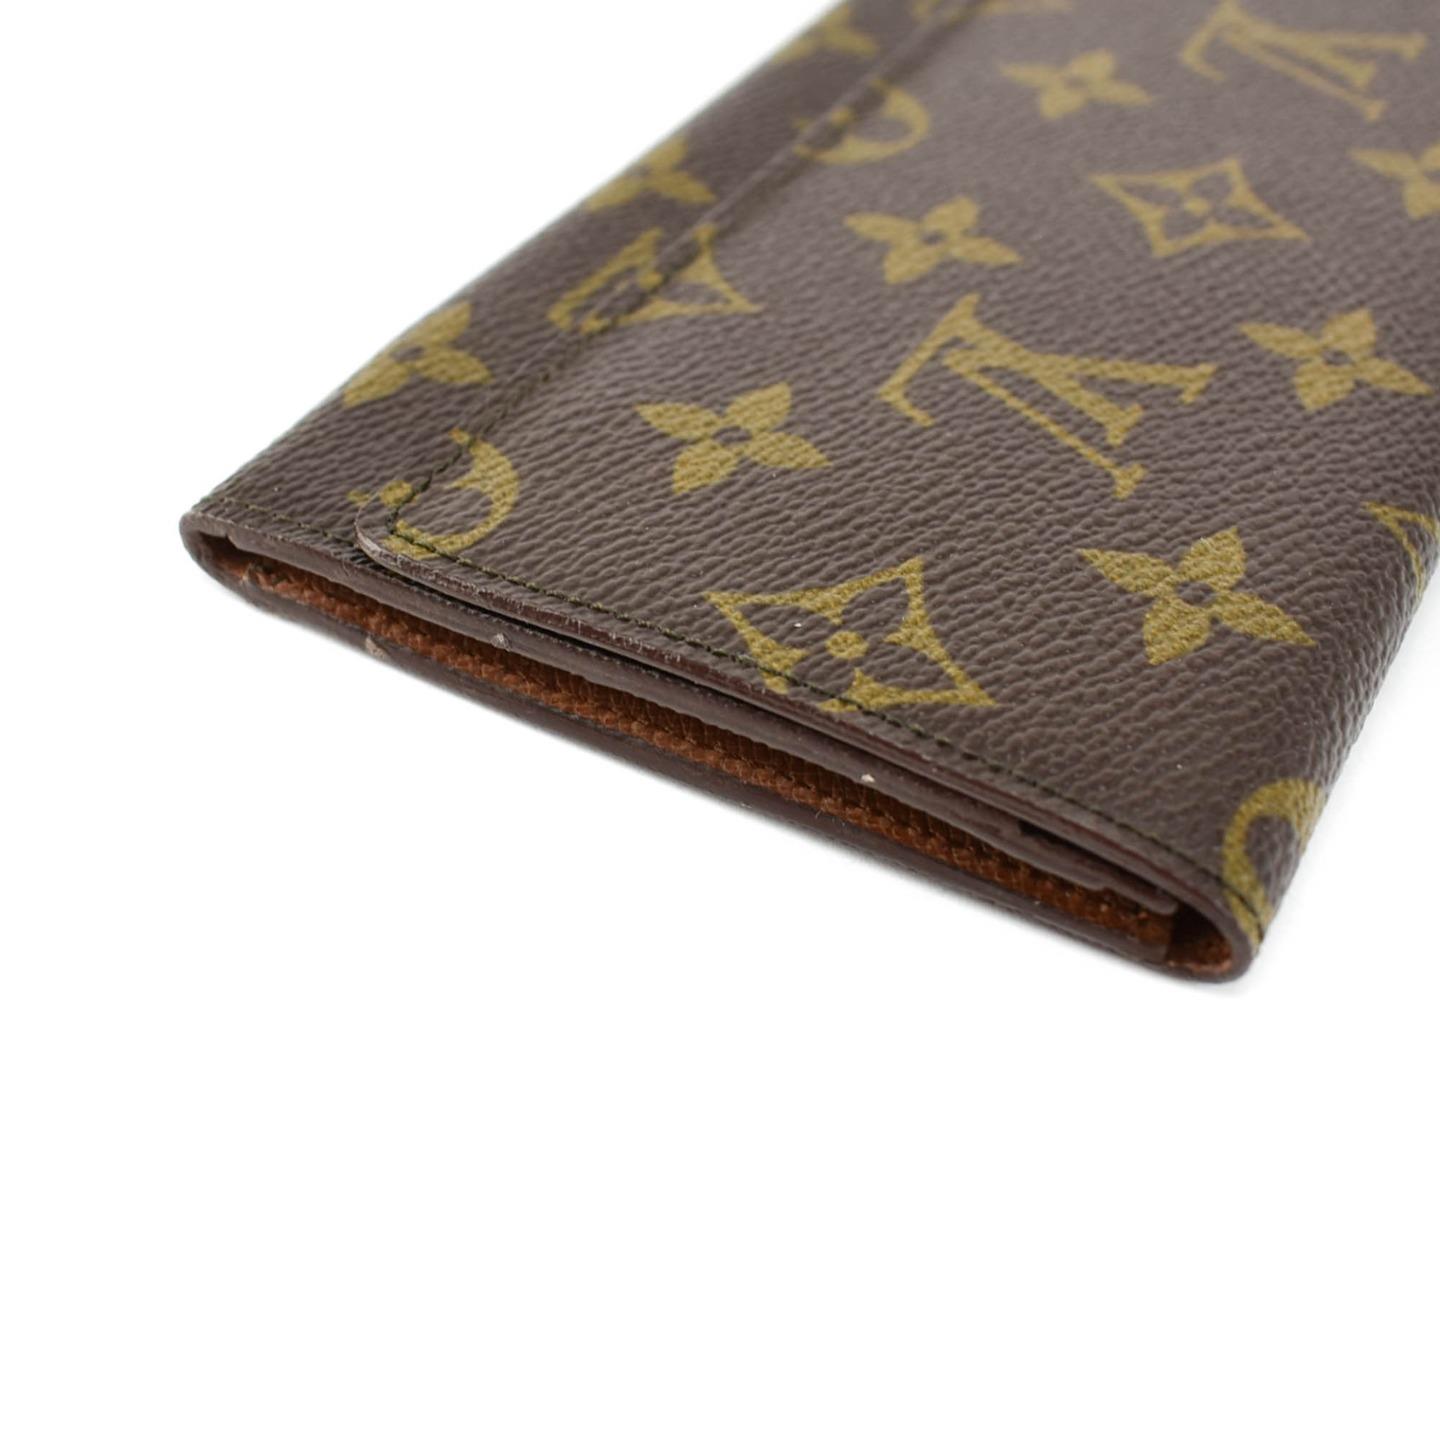 Louis Vuitton Monogram Pocket Agenda / Checkbook Cover Auction